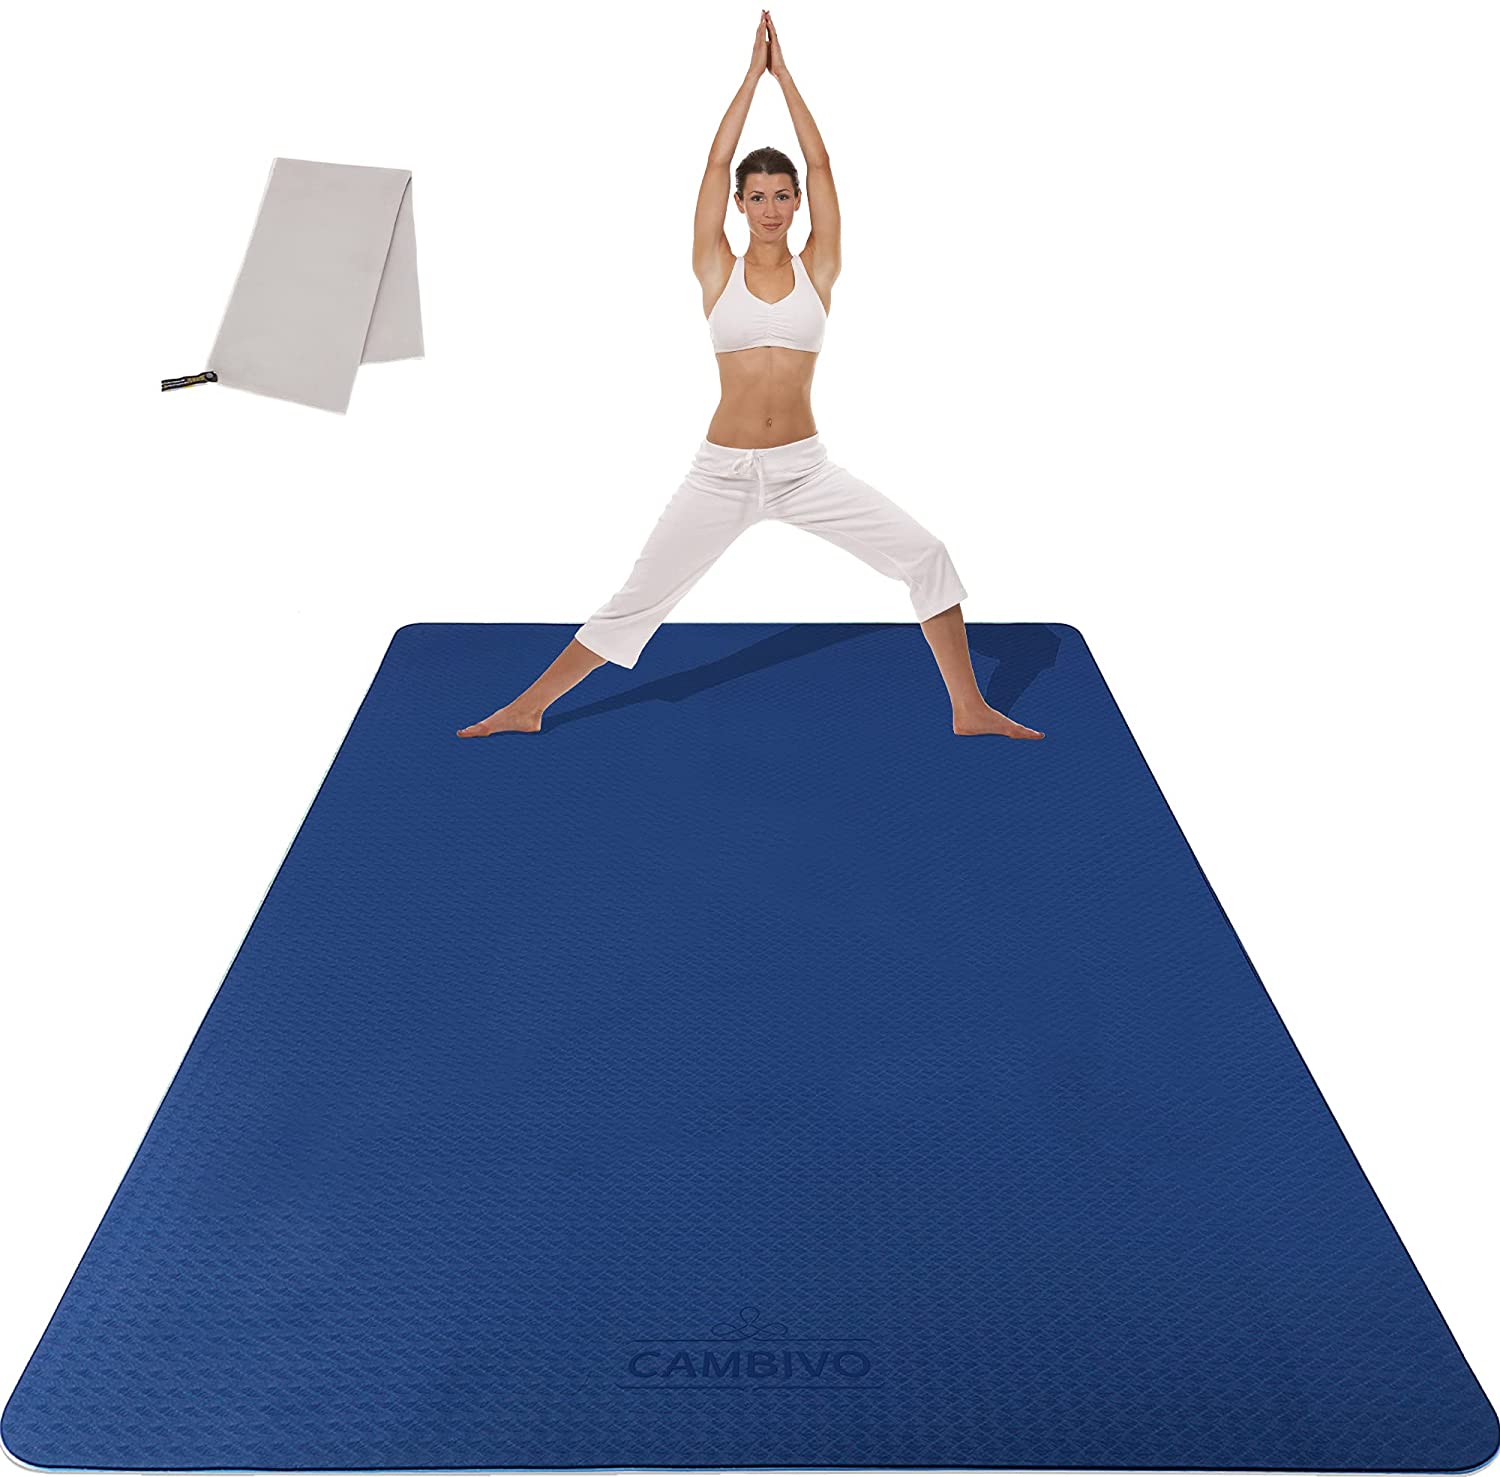 https://www.yogamatstore.com.au/wp-content/uploads/Cambivo-Extra-Large-Yoga-Mat-Blue.jpg